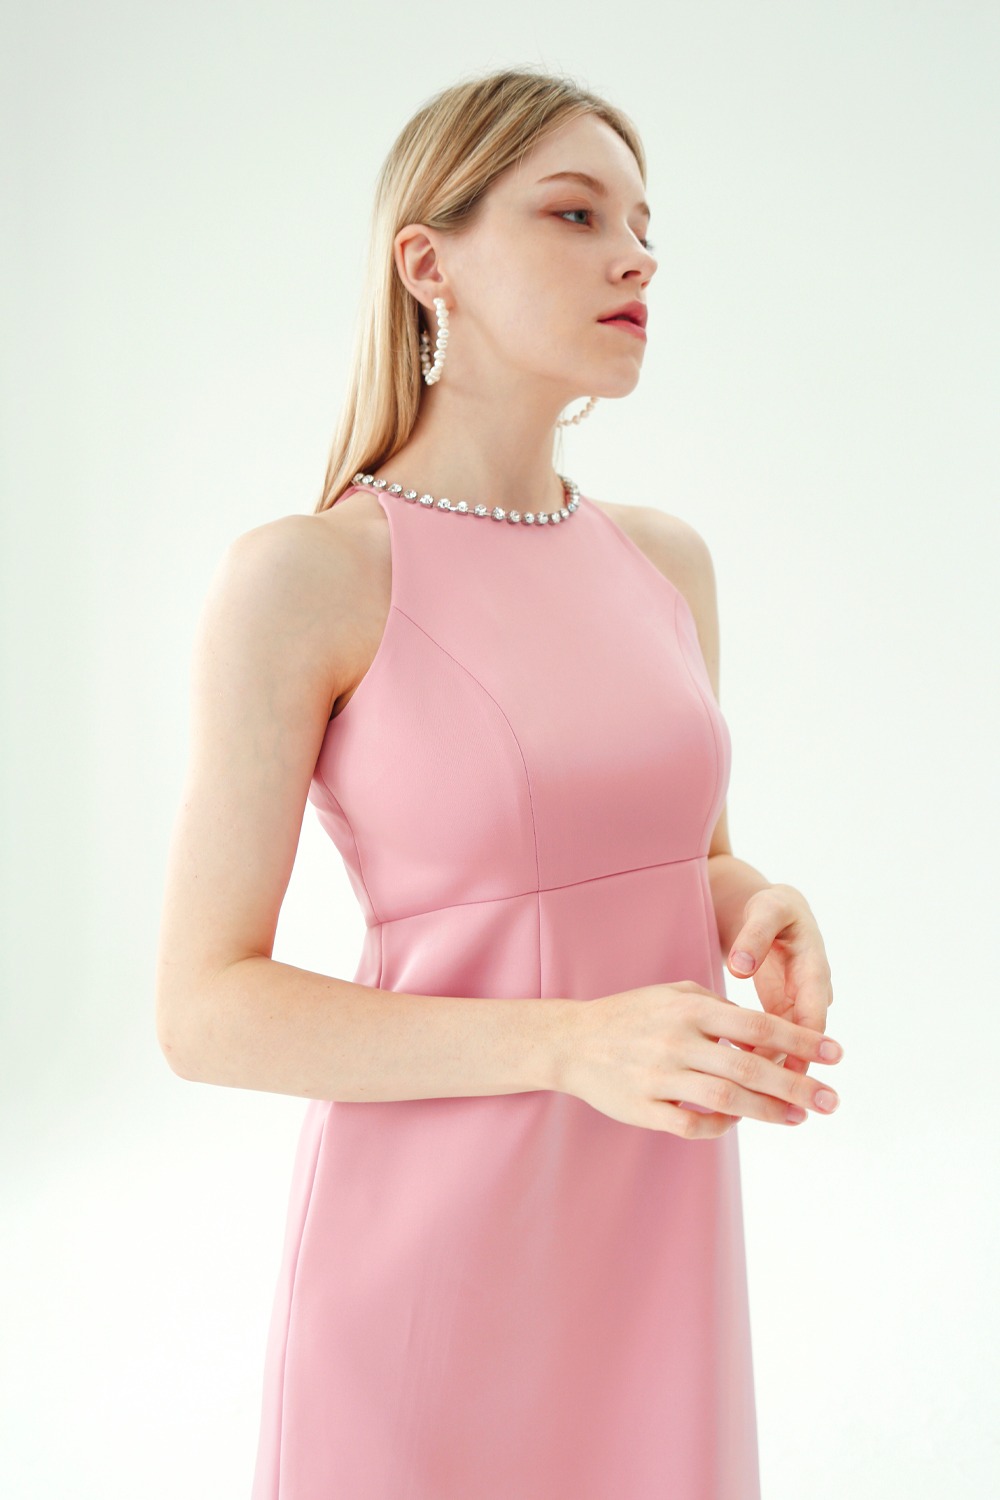 Jewel necklace dress (Pink)